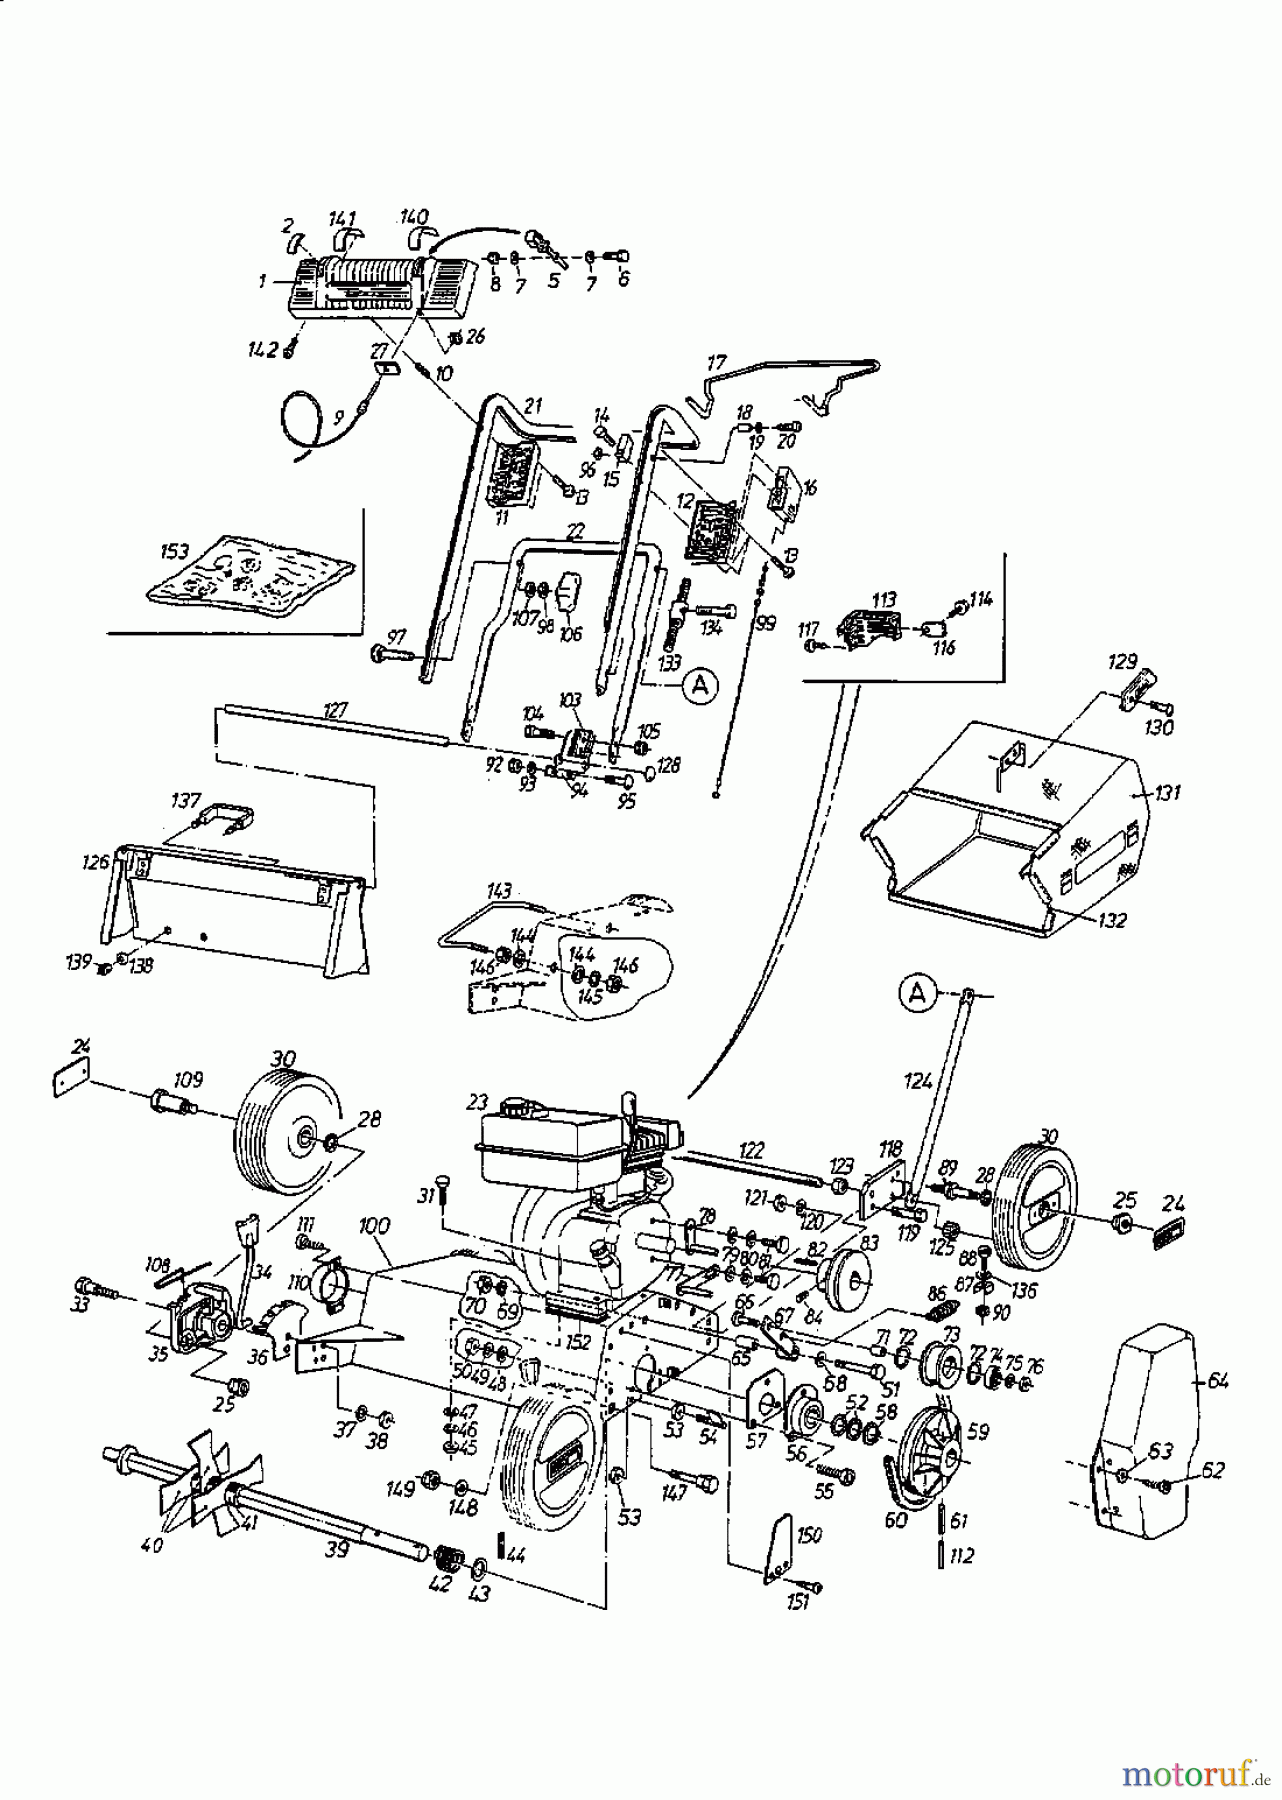  Gutbrod Petrol verticutter MV 404 16APL01U604  (1999) Basic machine